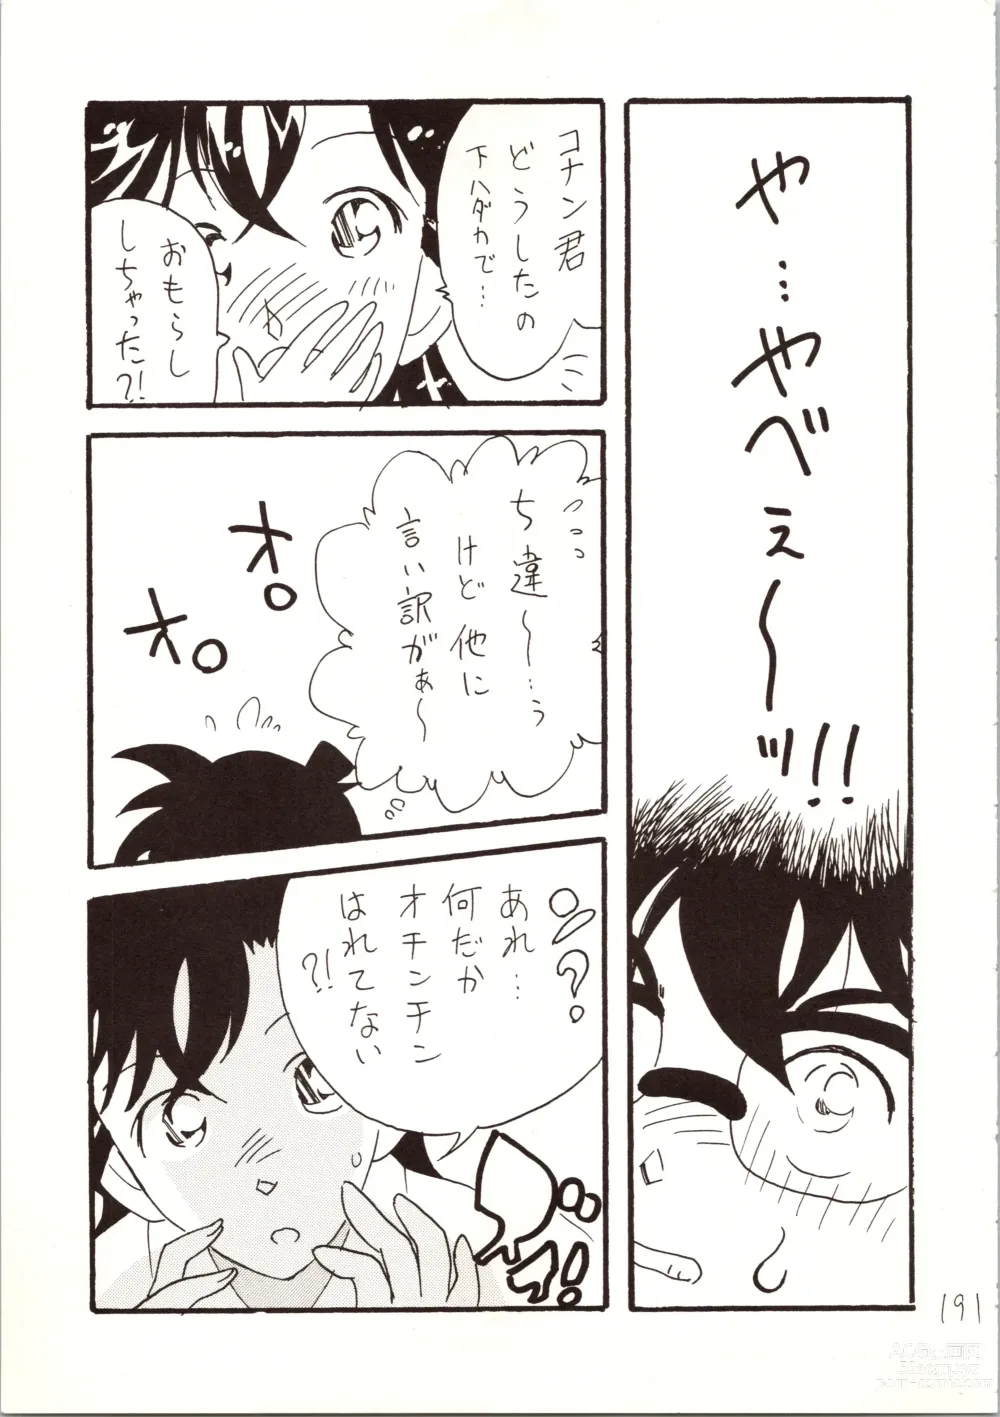 Page 191 of doujinshi Meitantei DX